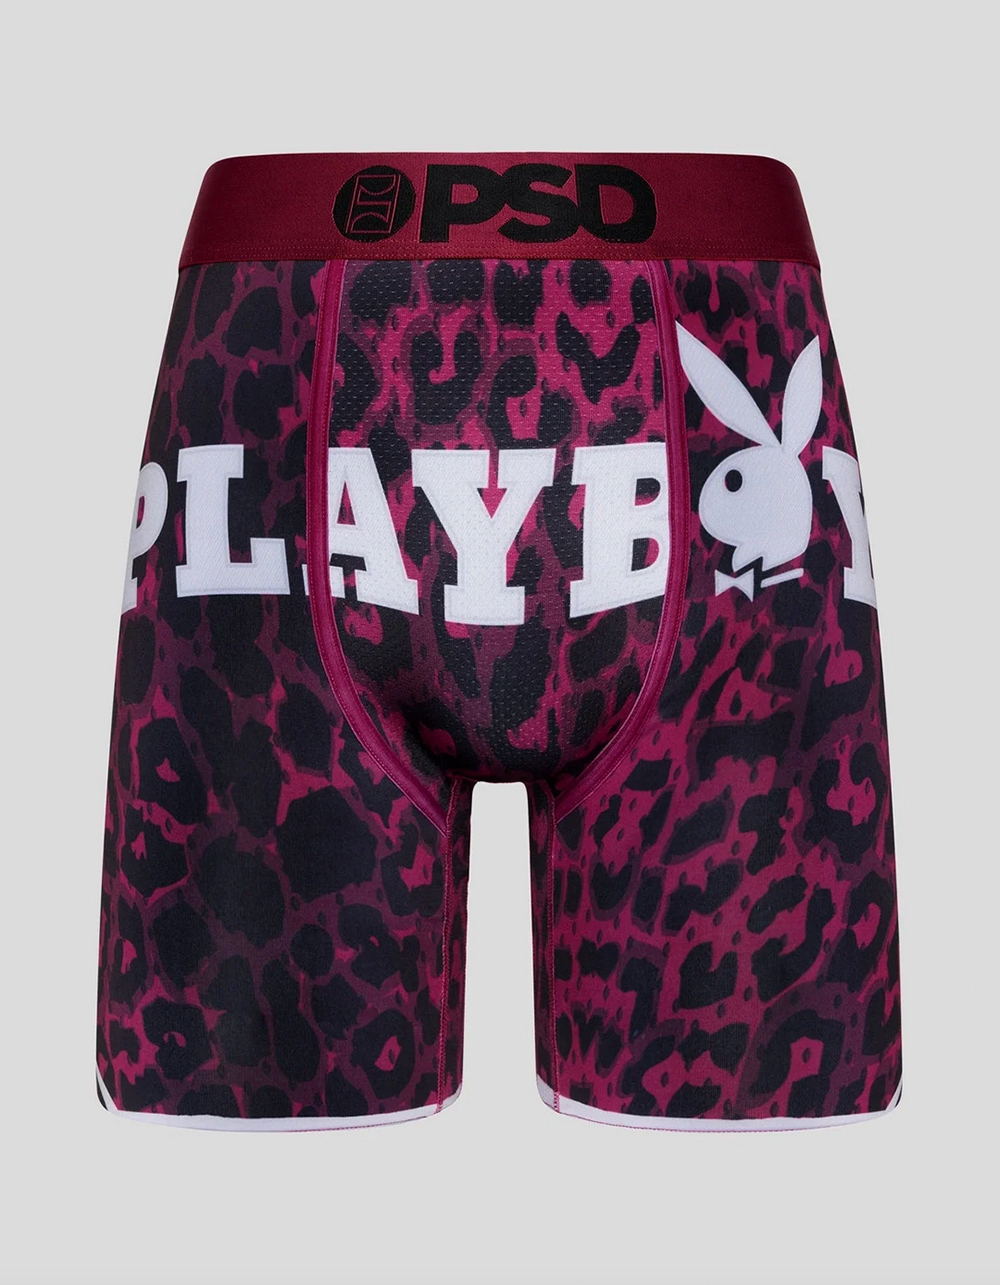 PSD x Playboy Baller Mens Boxer Briefs - MULTI